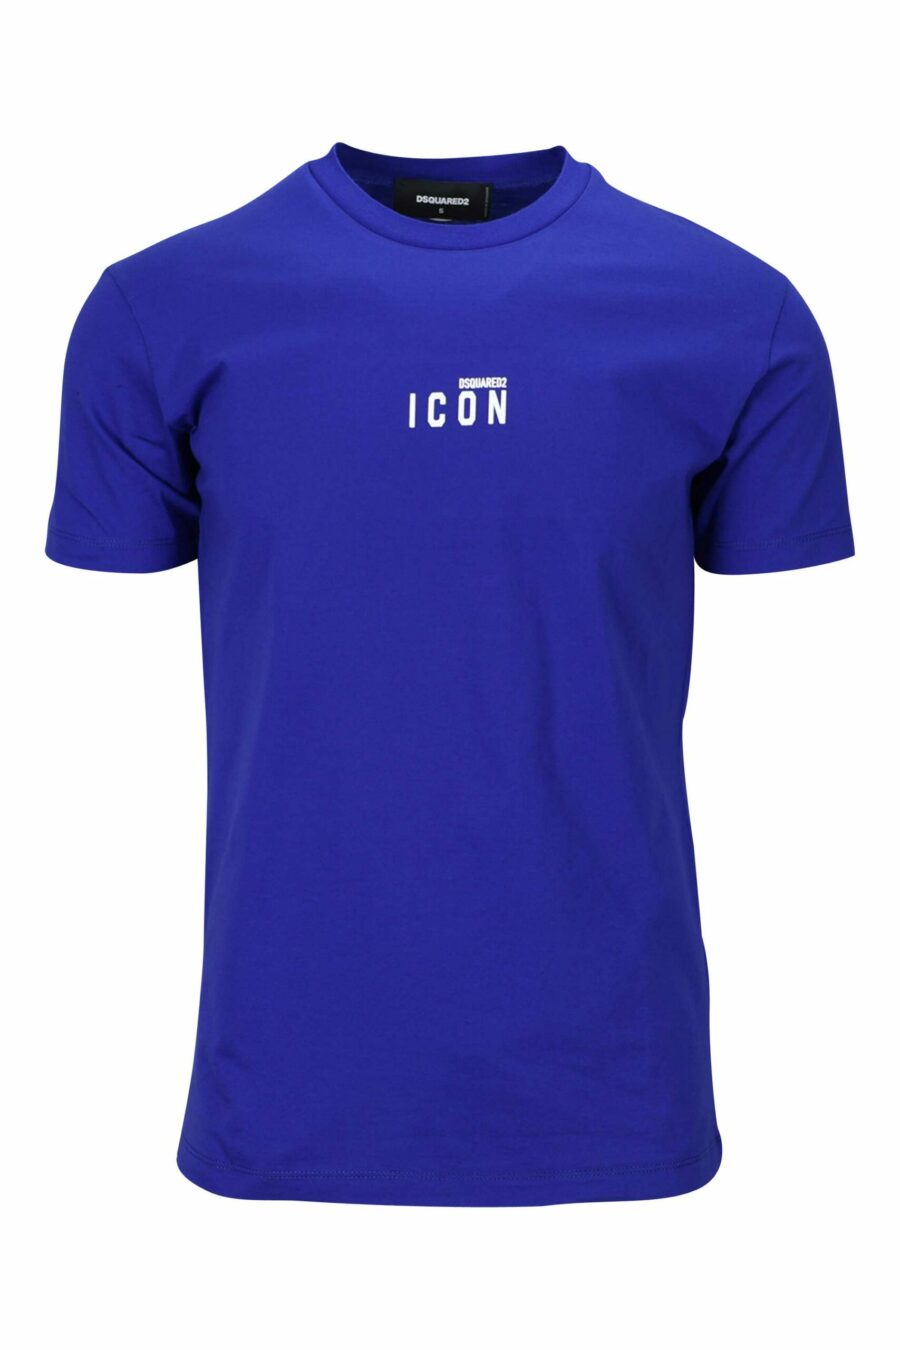 Camiseta azul oscuro con minilogo "icon" - 8054148021160 scaled